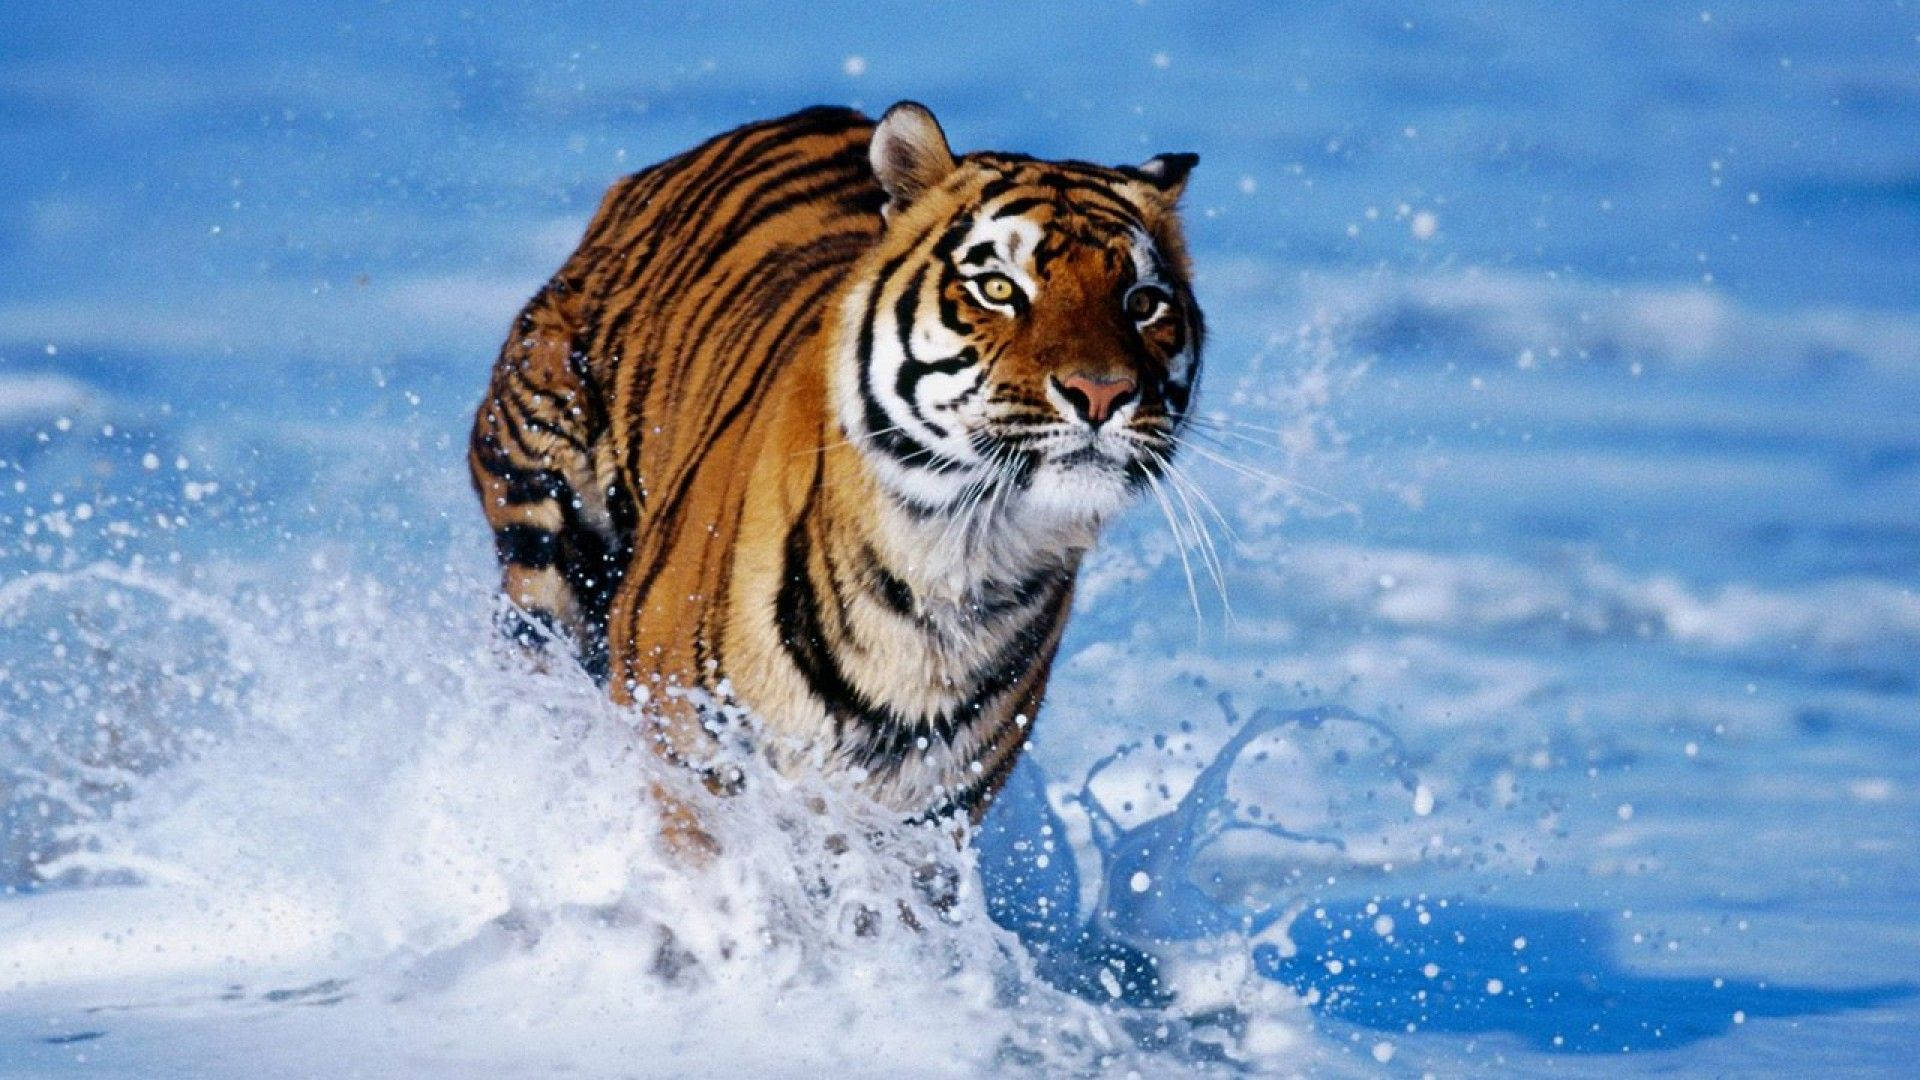 Tiger Running In Water